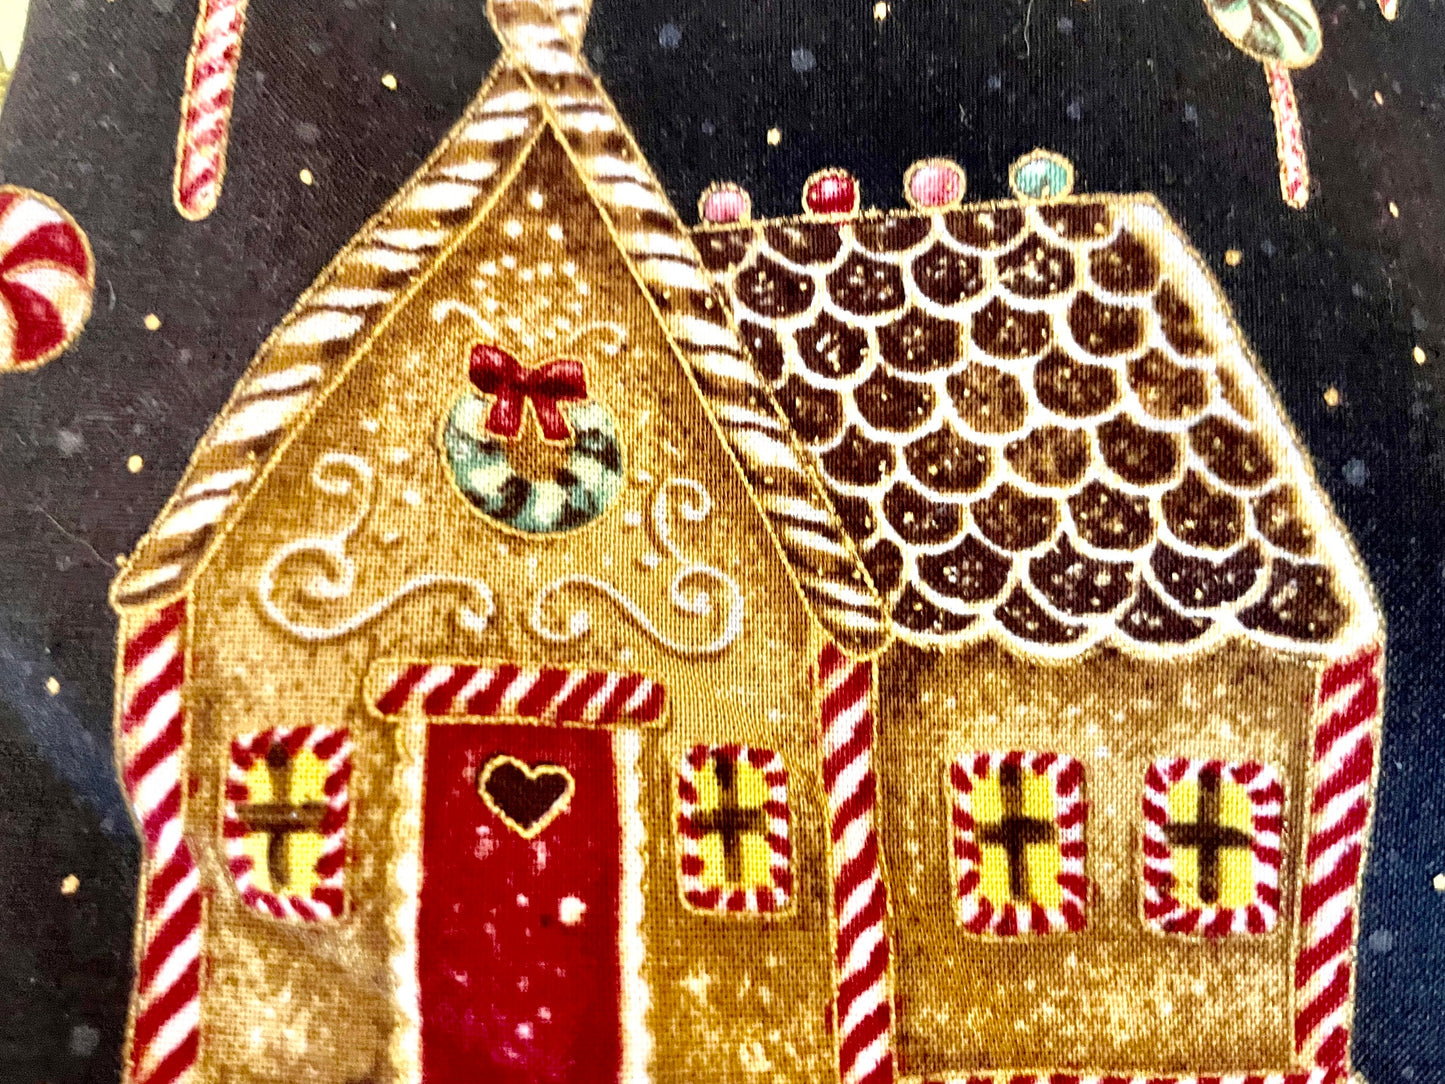 Beautiful Gingerbread Houses Christmas blanket